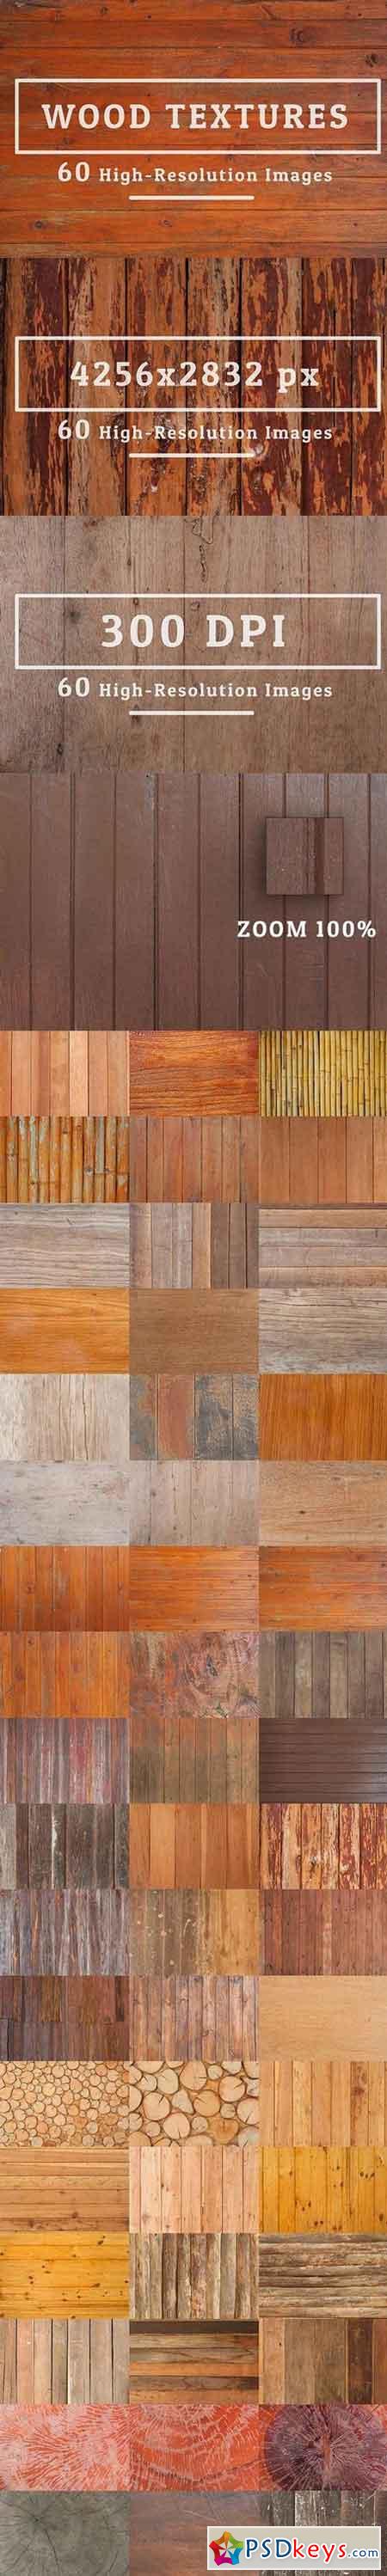 60 Wood Texture Background Set 09 802092